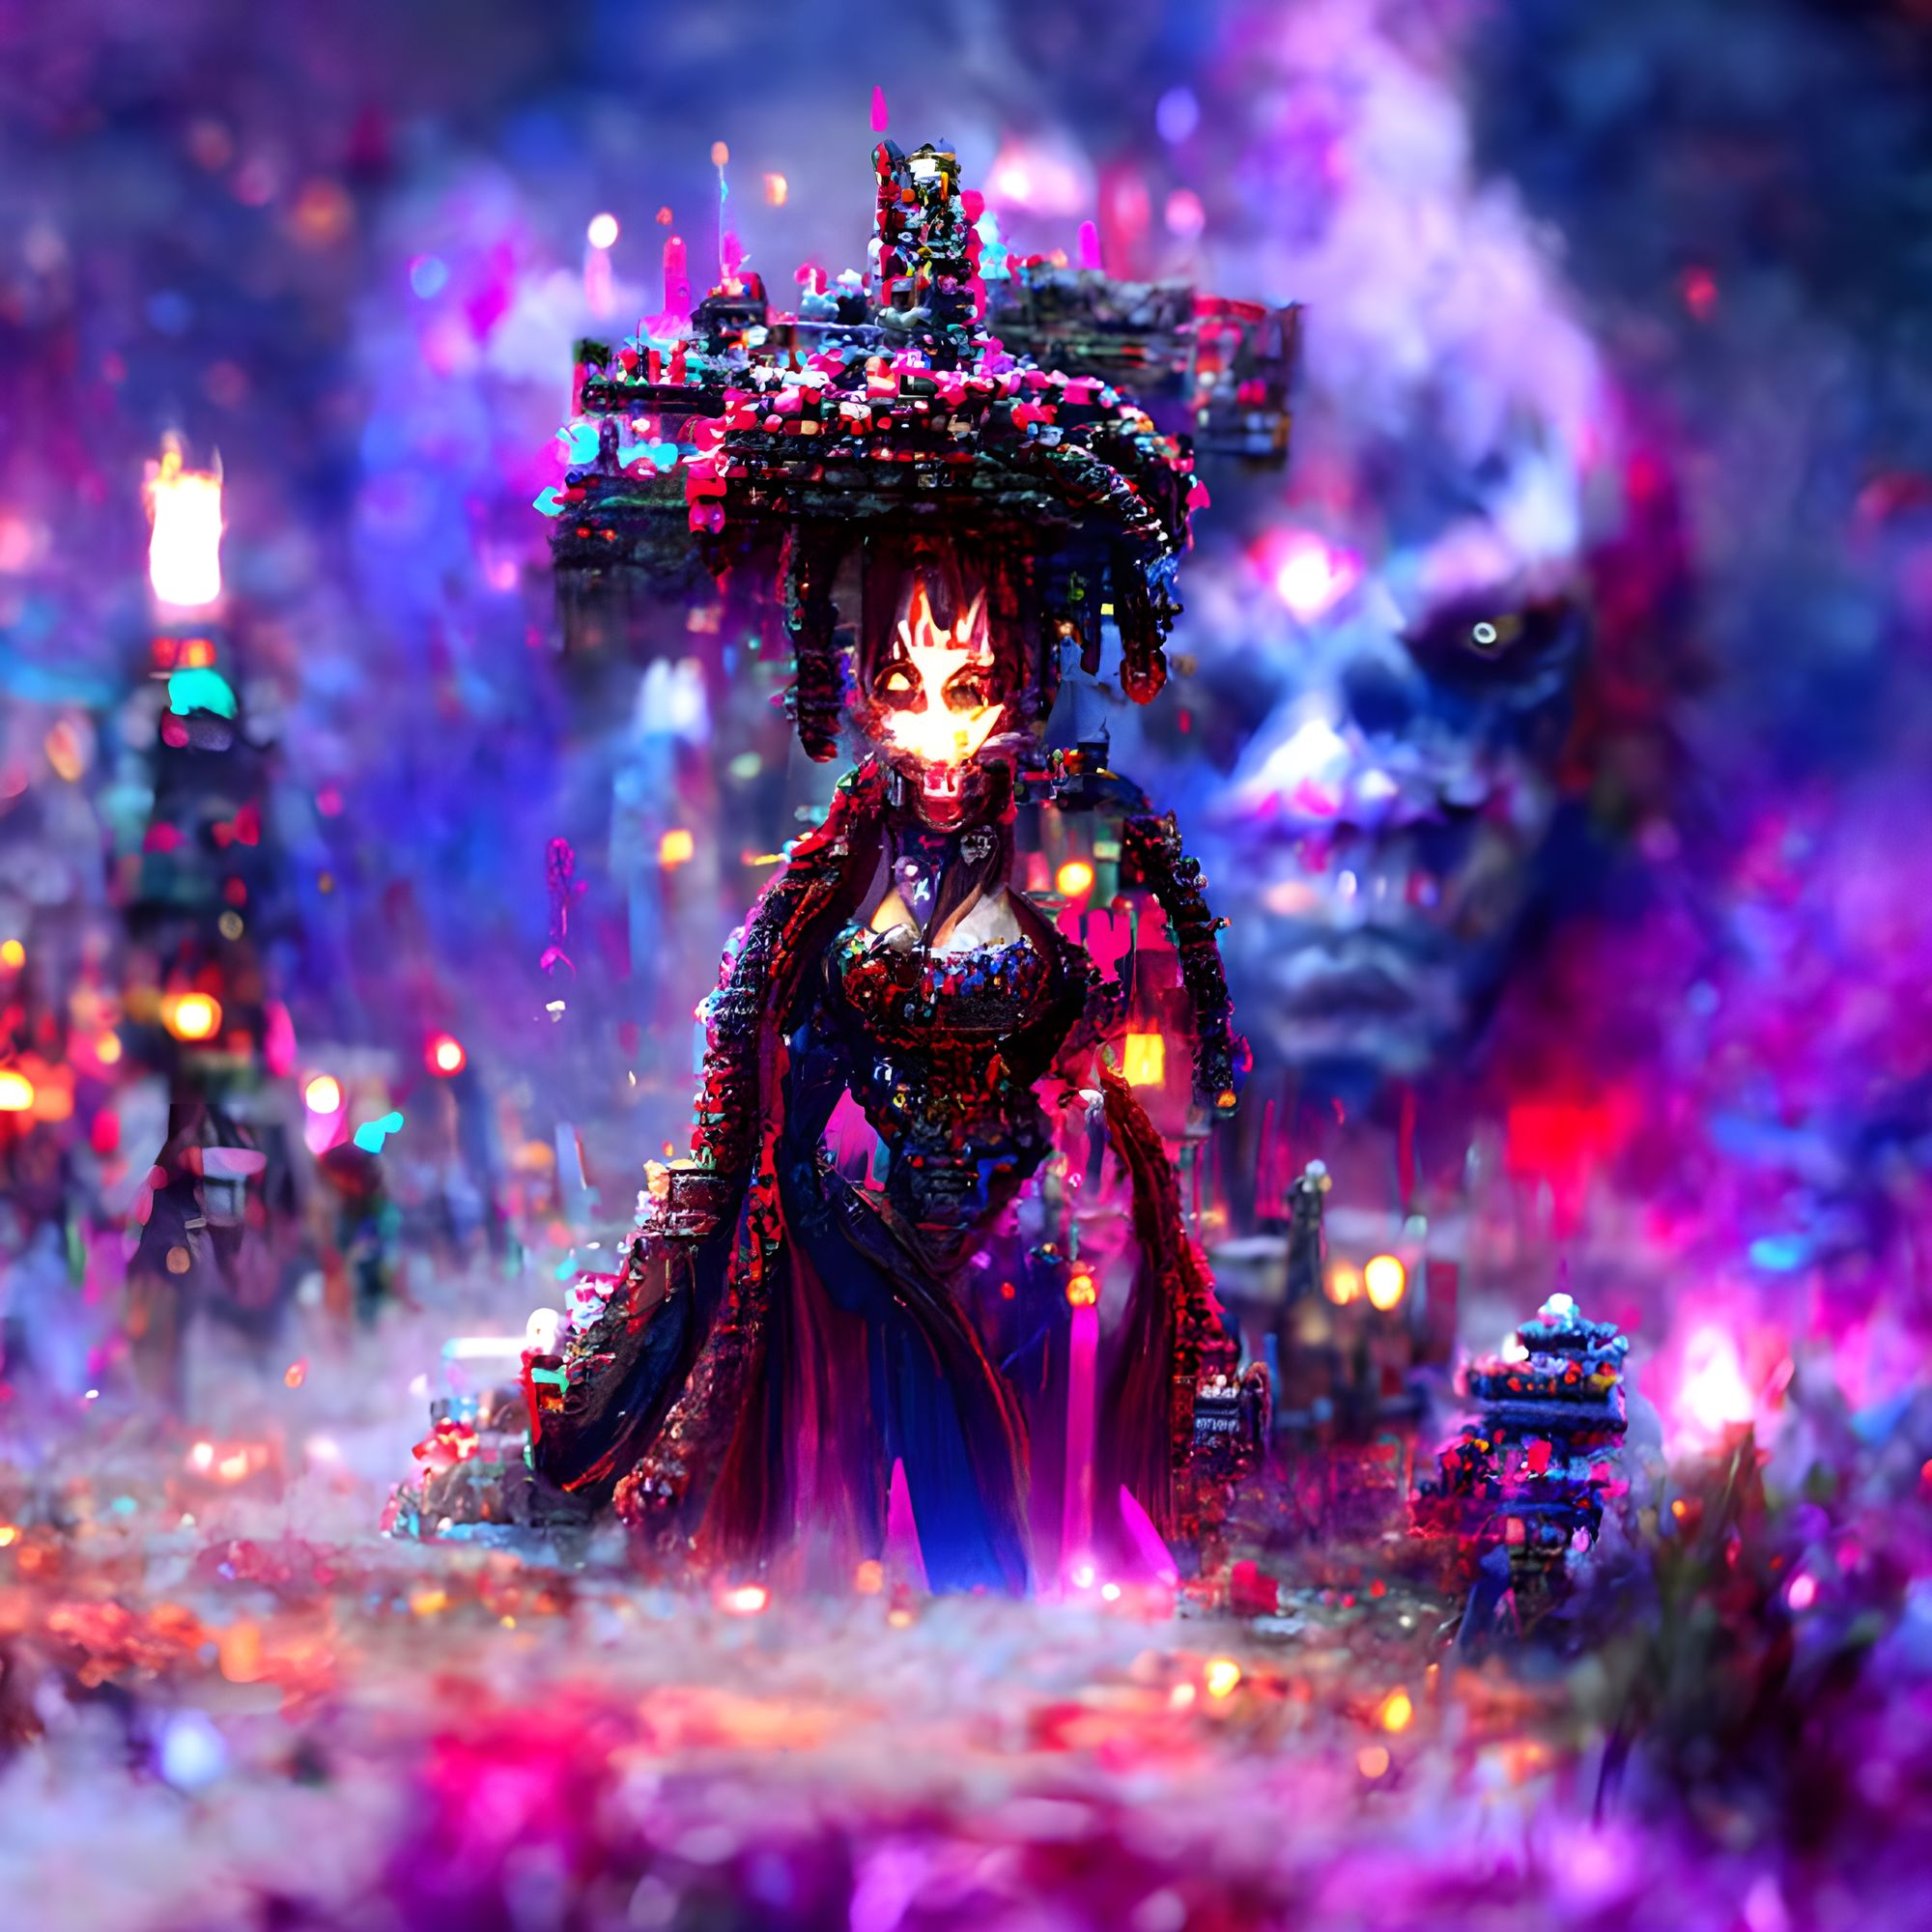 Anime Lo-fi City 8 bit Art Day, an art canvas by Pixel Hoo - INPRNT